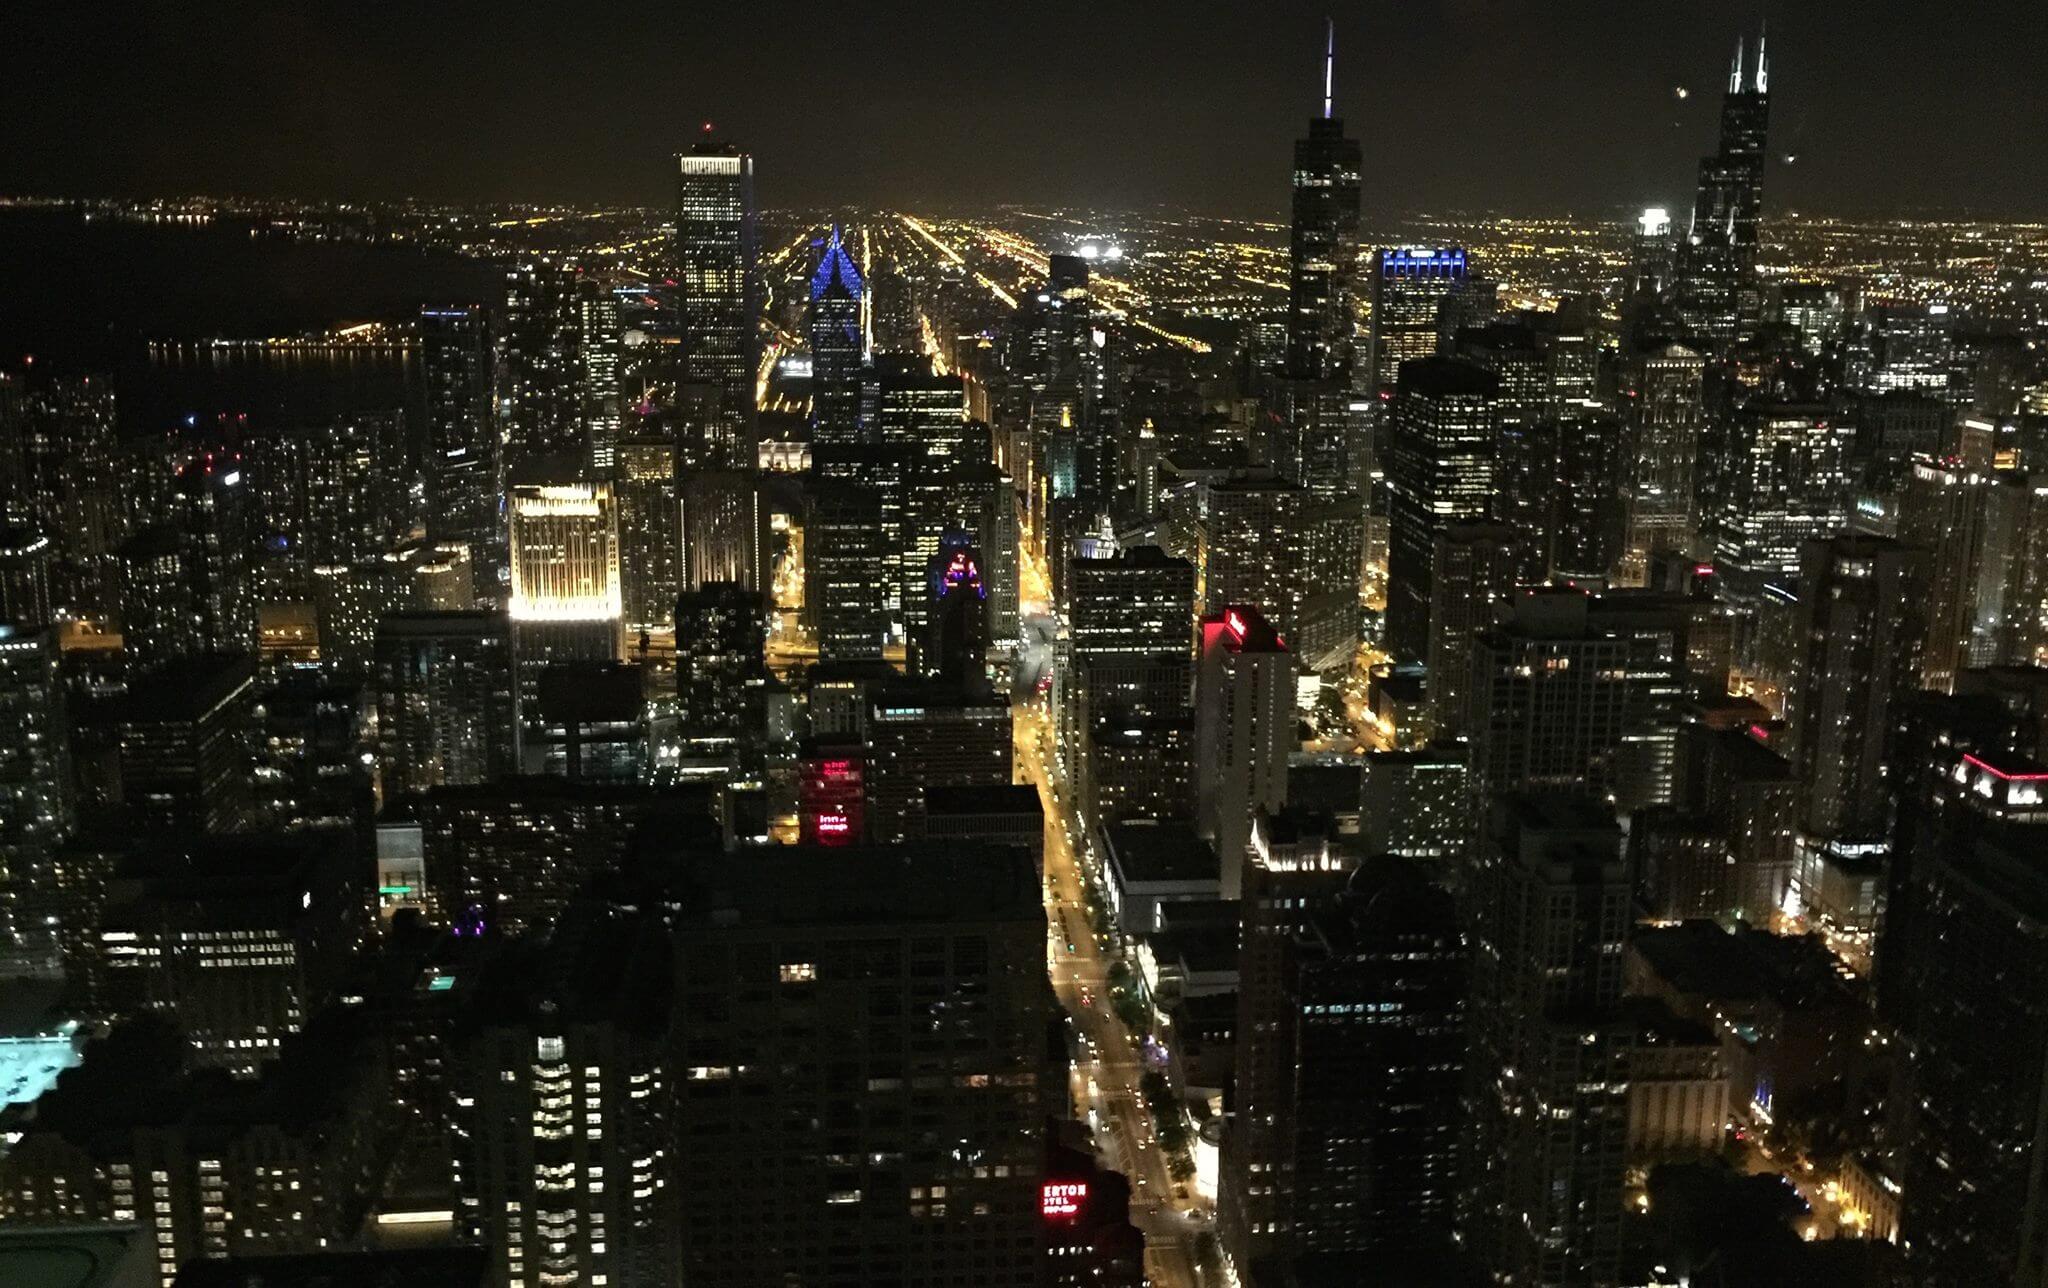 Chicago at Night